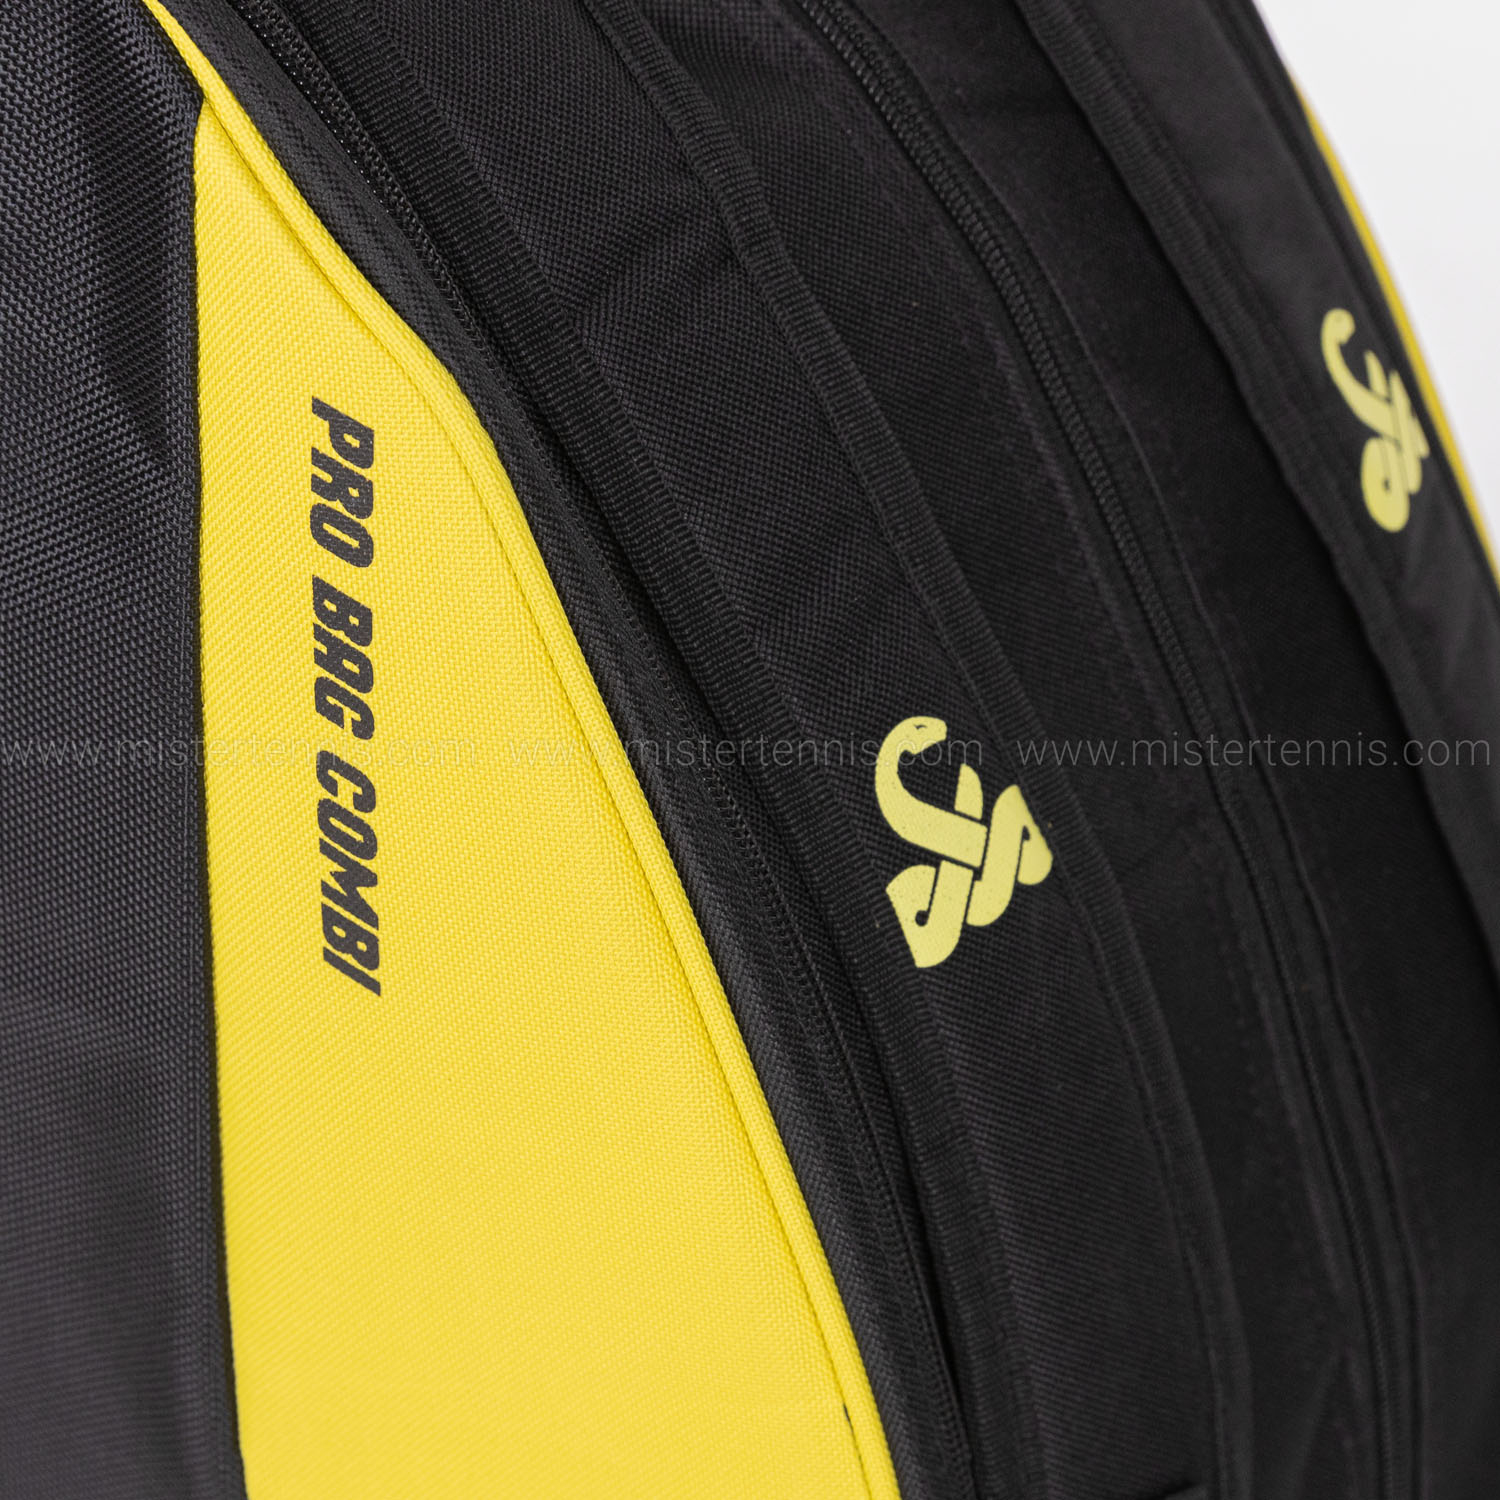 Vibor-A Pro Combi Bag - Black/Yellow